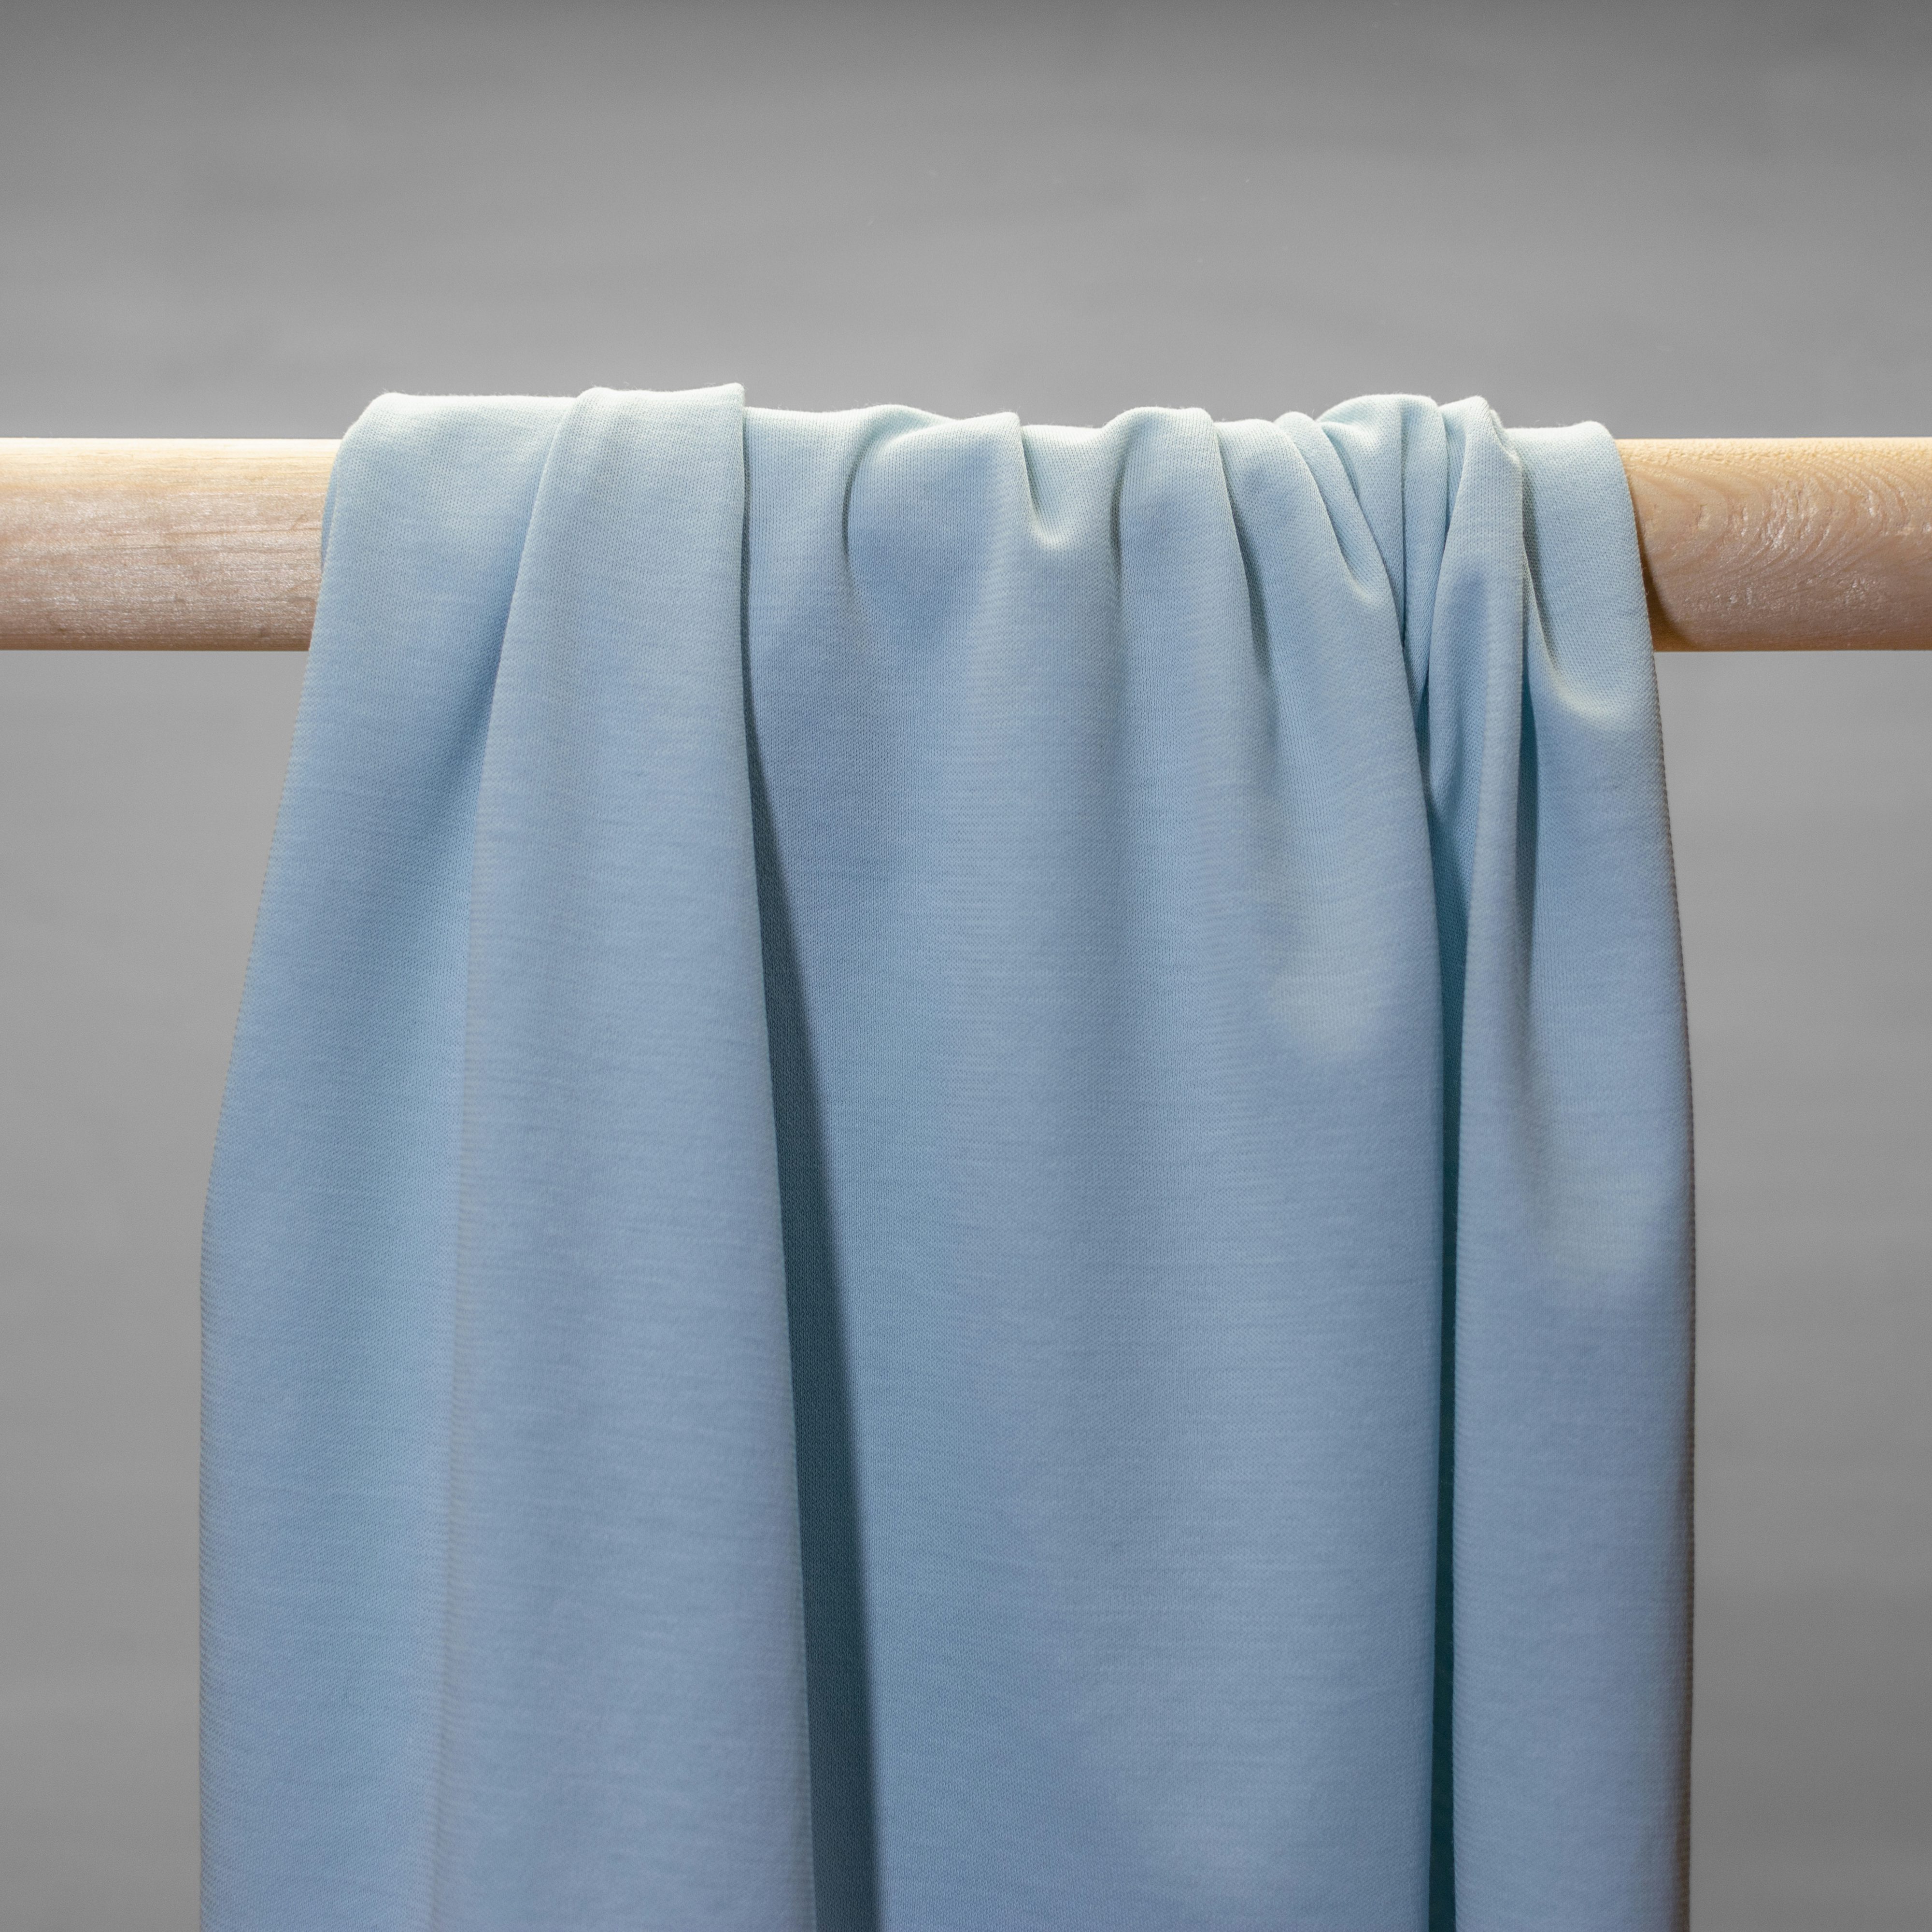 Powder blue  jersey hanging in folds.